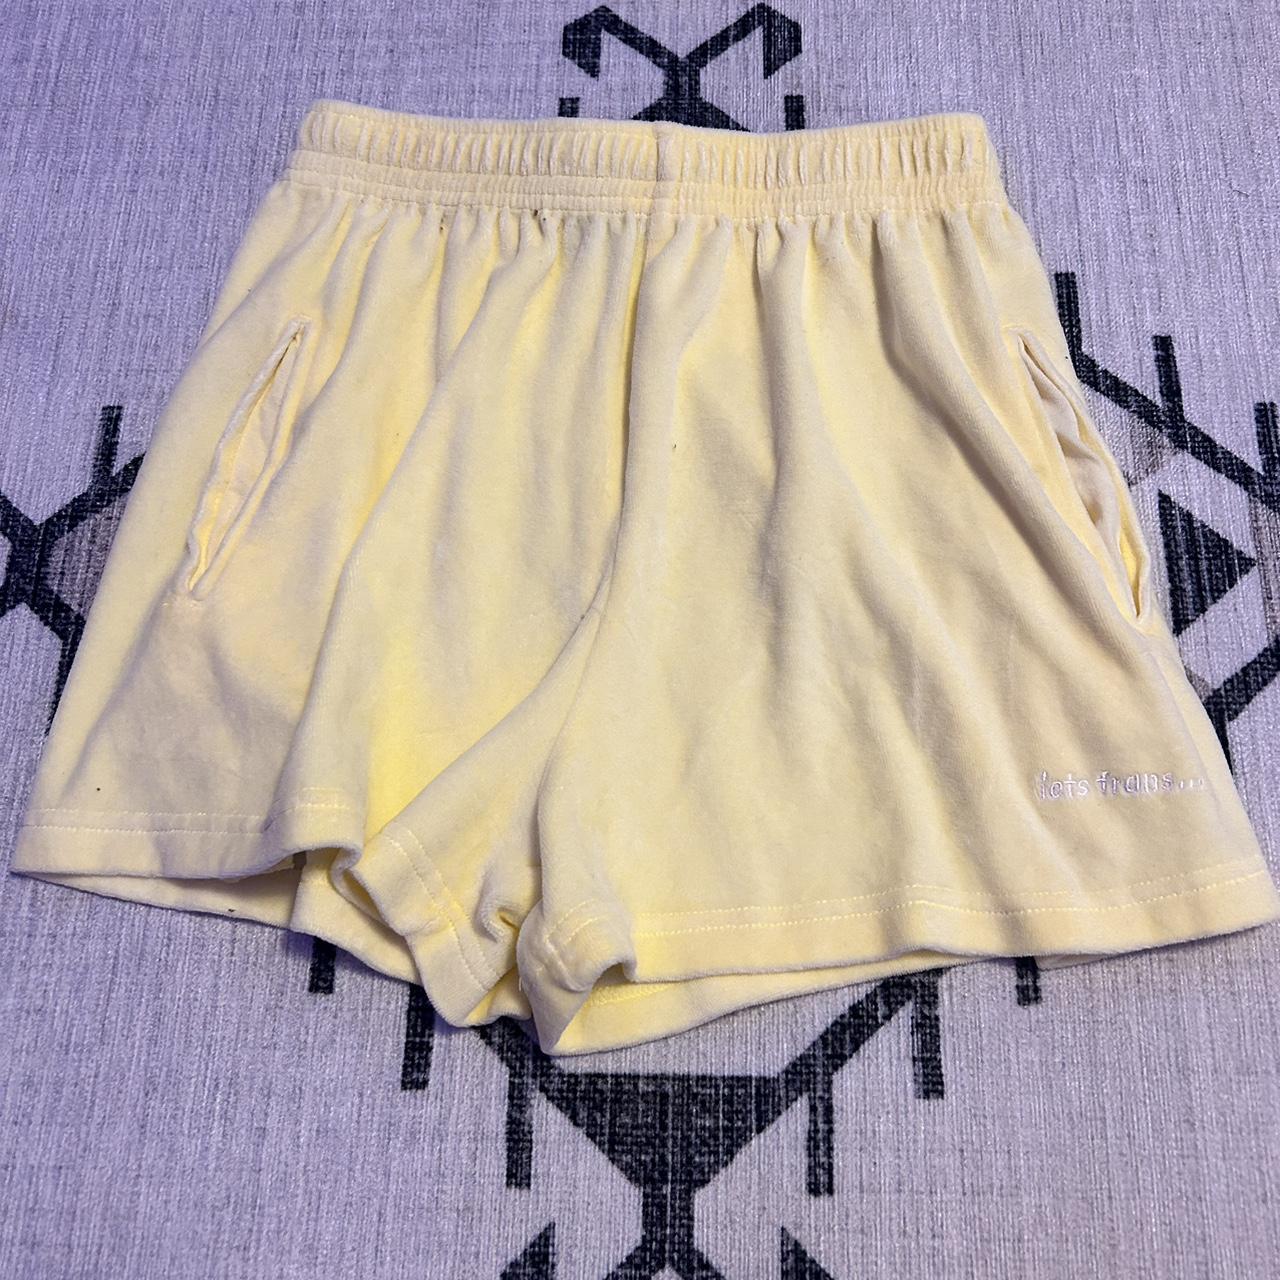 iets frans... Women's Shorts | Depop